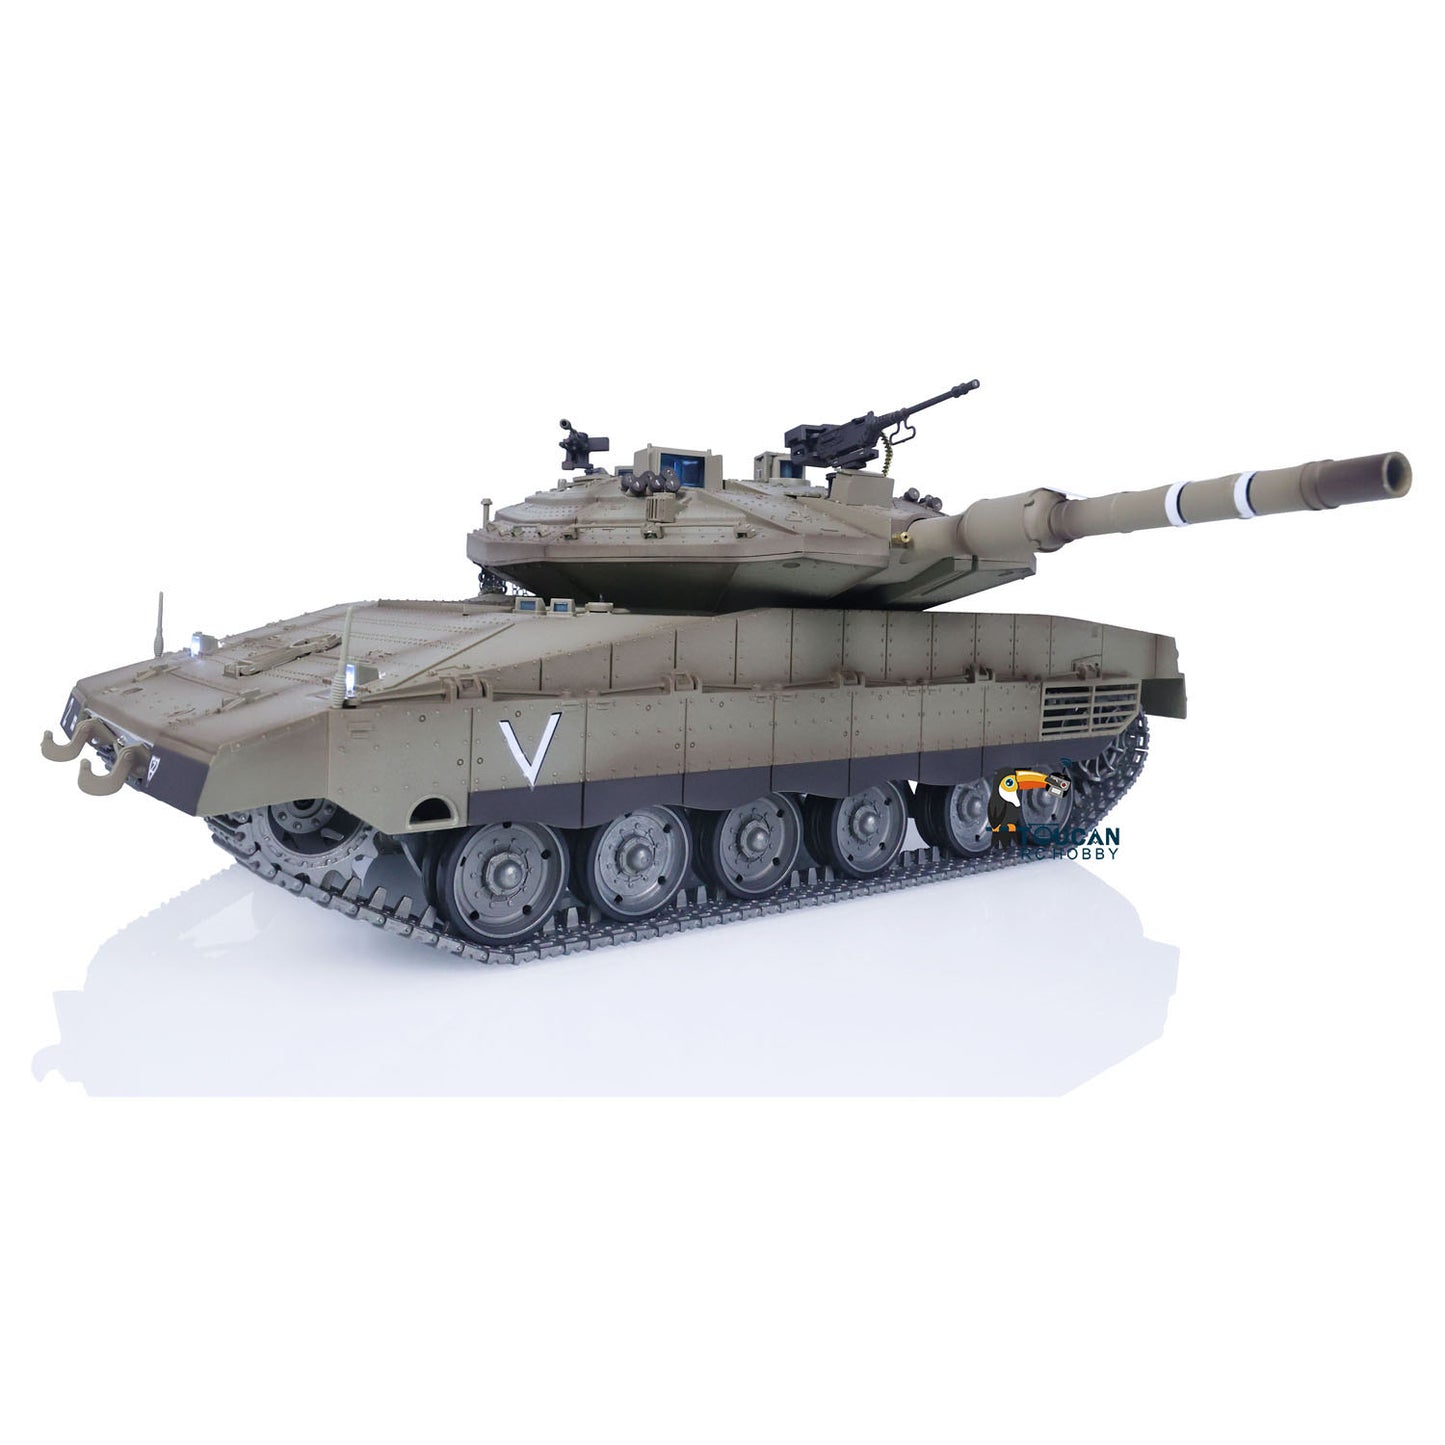 Full Metal IDF Merkava MK IV 360 for Heng Long 1/16 Radio Controlled Military Model RC Battle Tank Chassis 3958 DIY